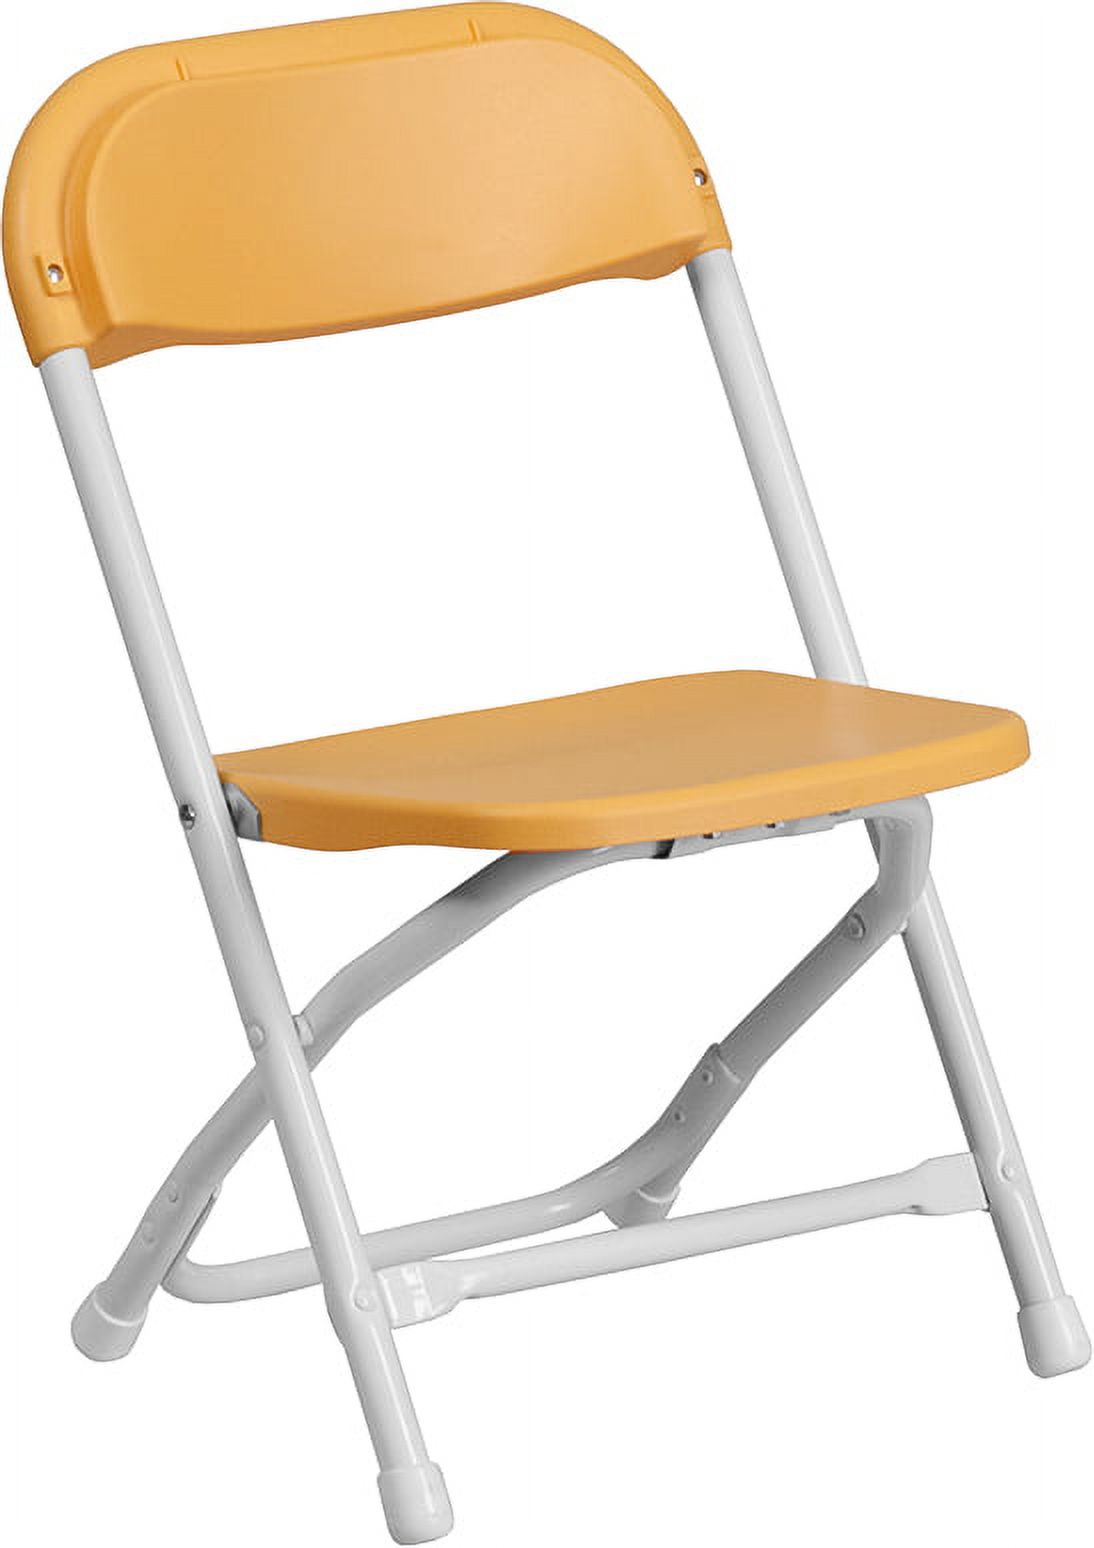 Flash Furniture Kids Yellow Plastic Folding Chair [Y-KID-YL-GG] - image 1 of 5